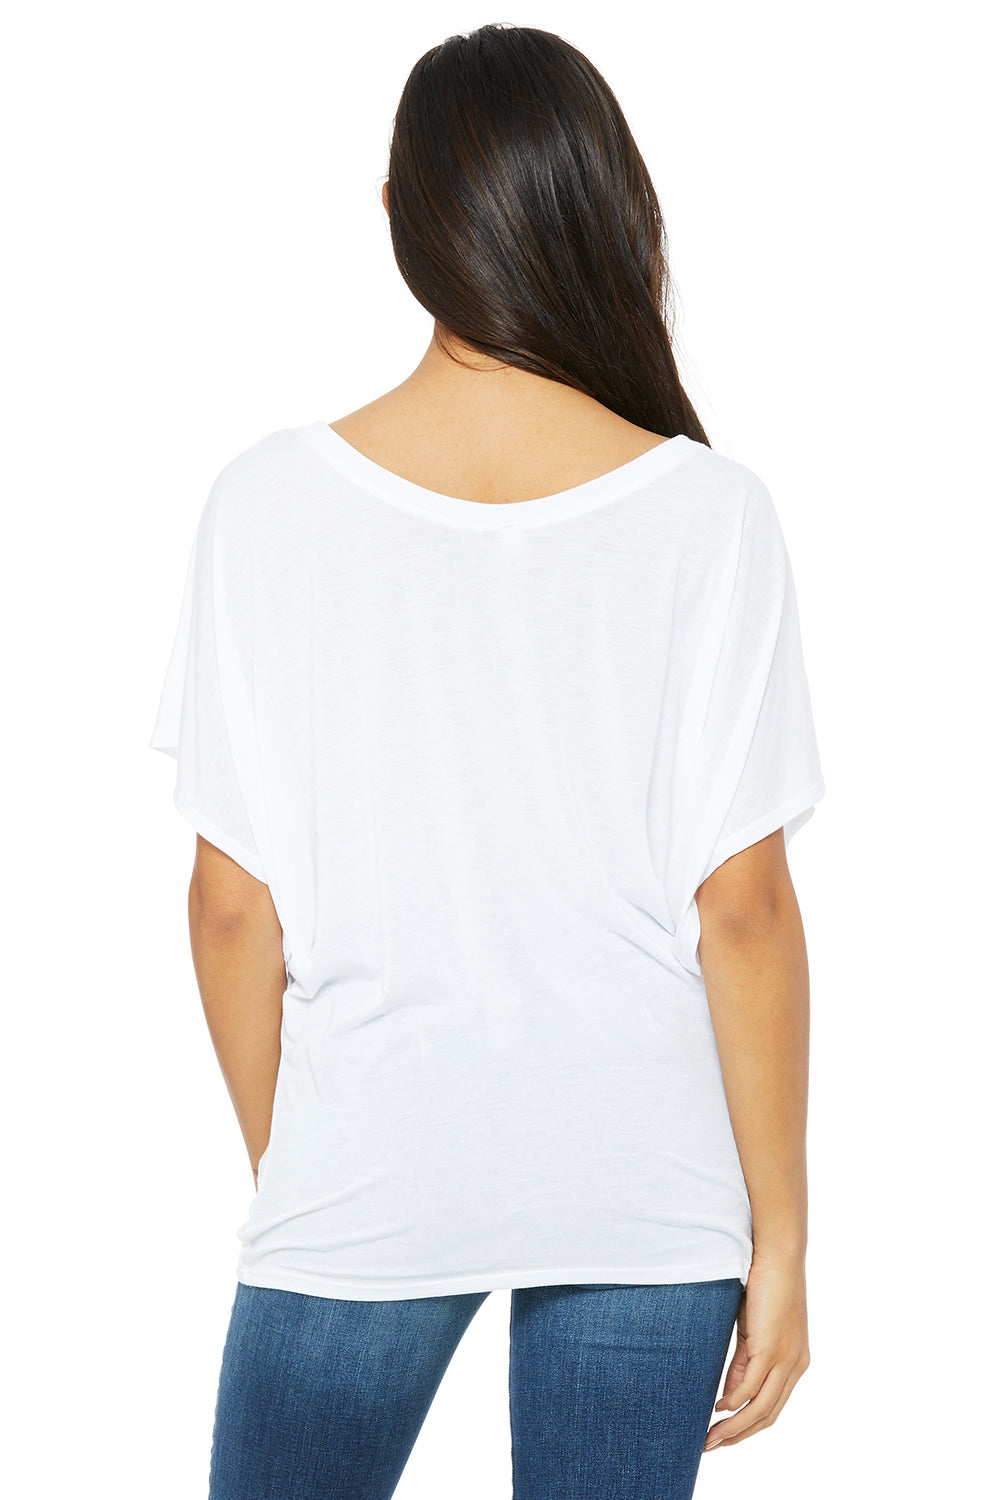 Bella + Canvas 8821 Womens Flowy Draped Dolman Short Sleeve Wide Neck T-Shirt White Back